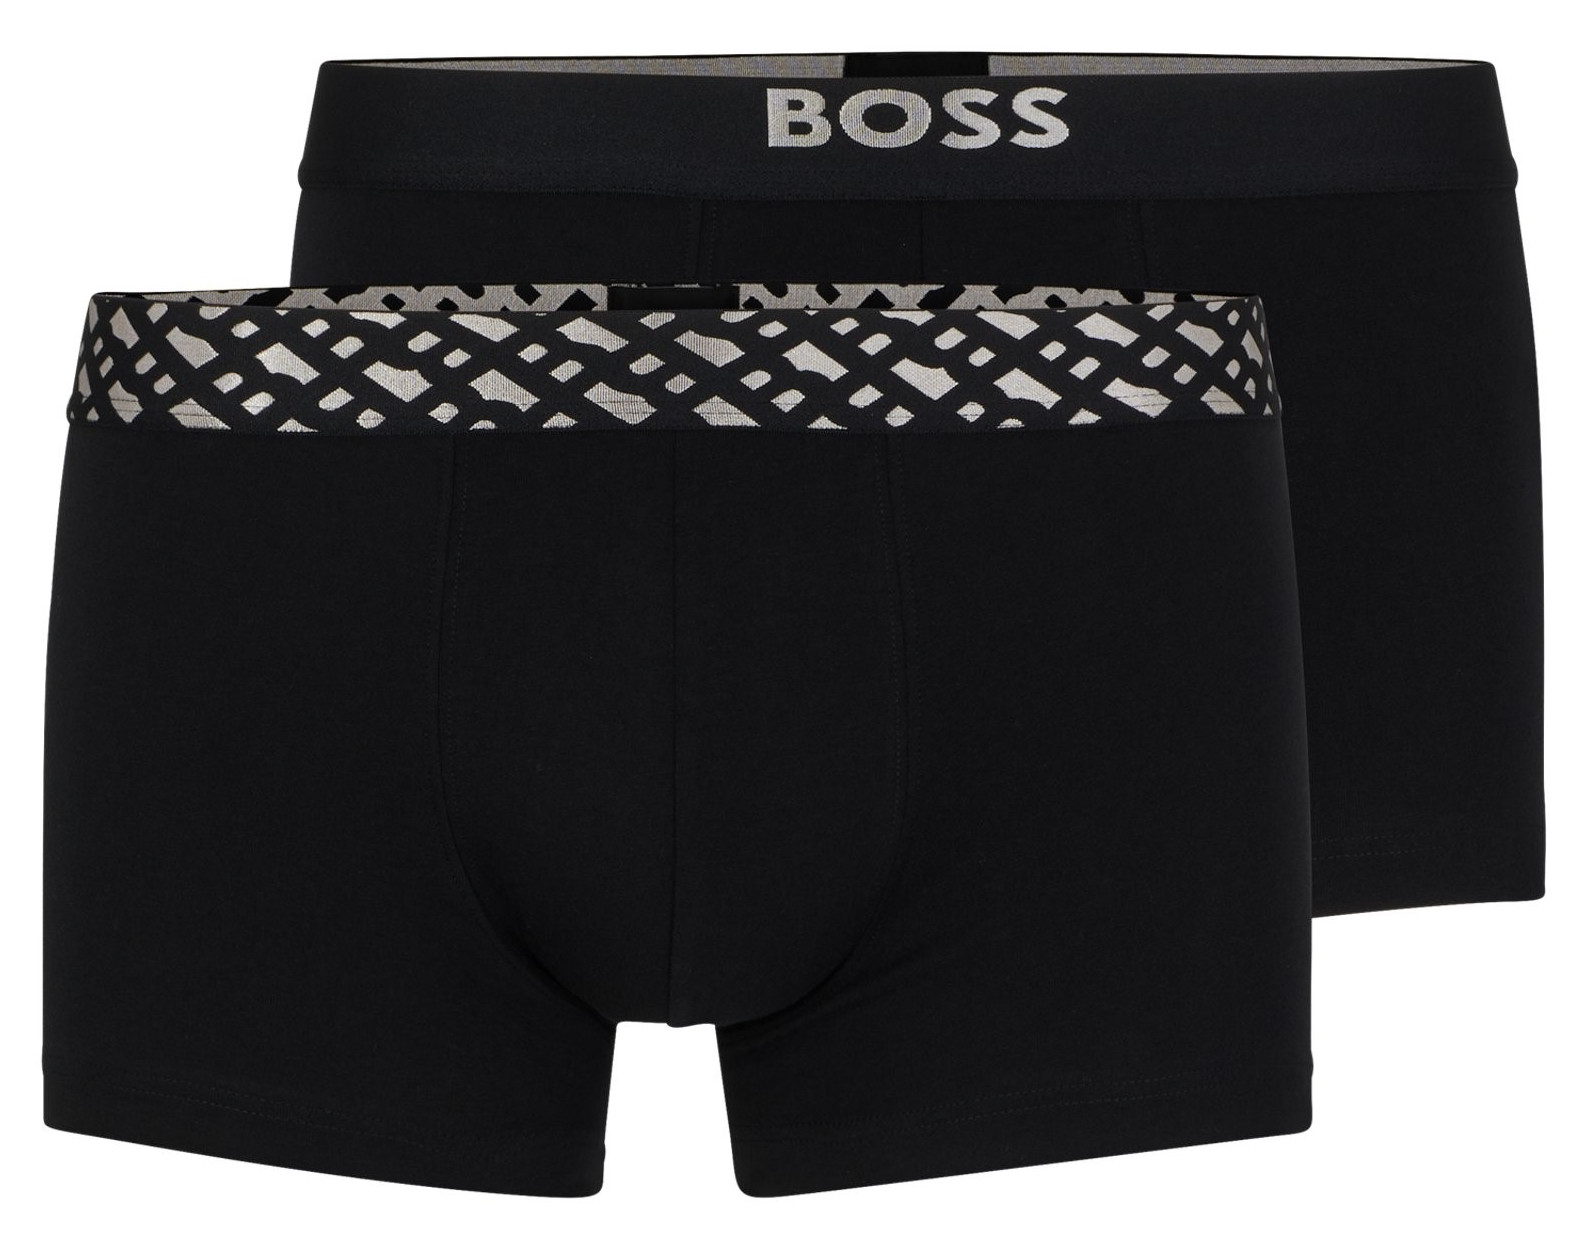 Hugo Boss 2 PACK - pánské boxerky BOSS 50499823-001 M